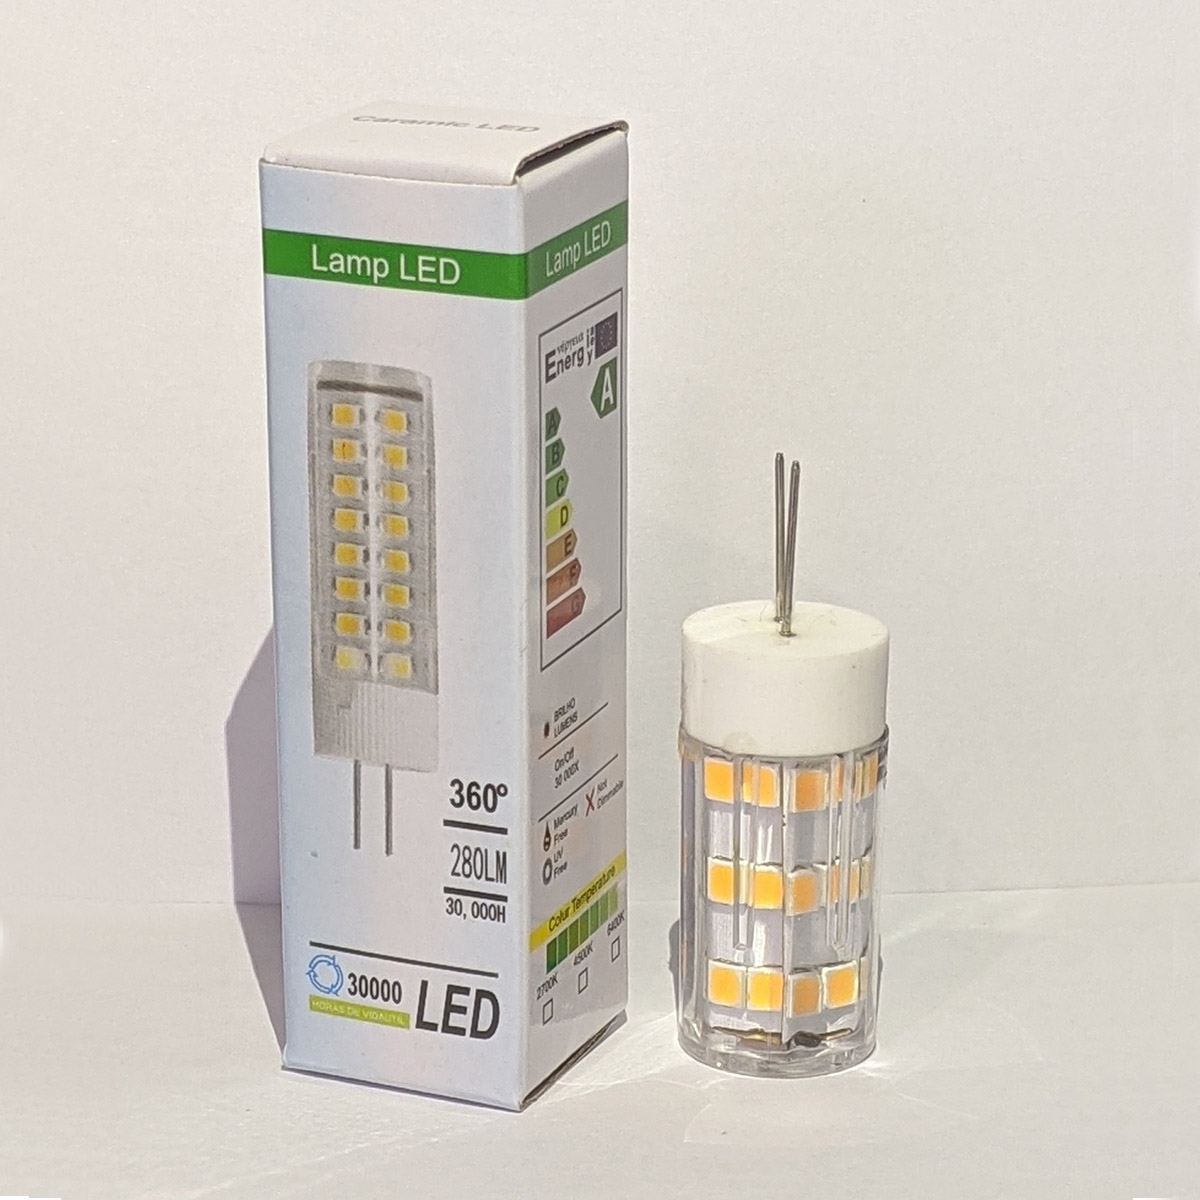 Lamp LED G4 Pin Type Bulb 5W 3000K - Warm White